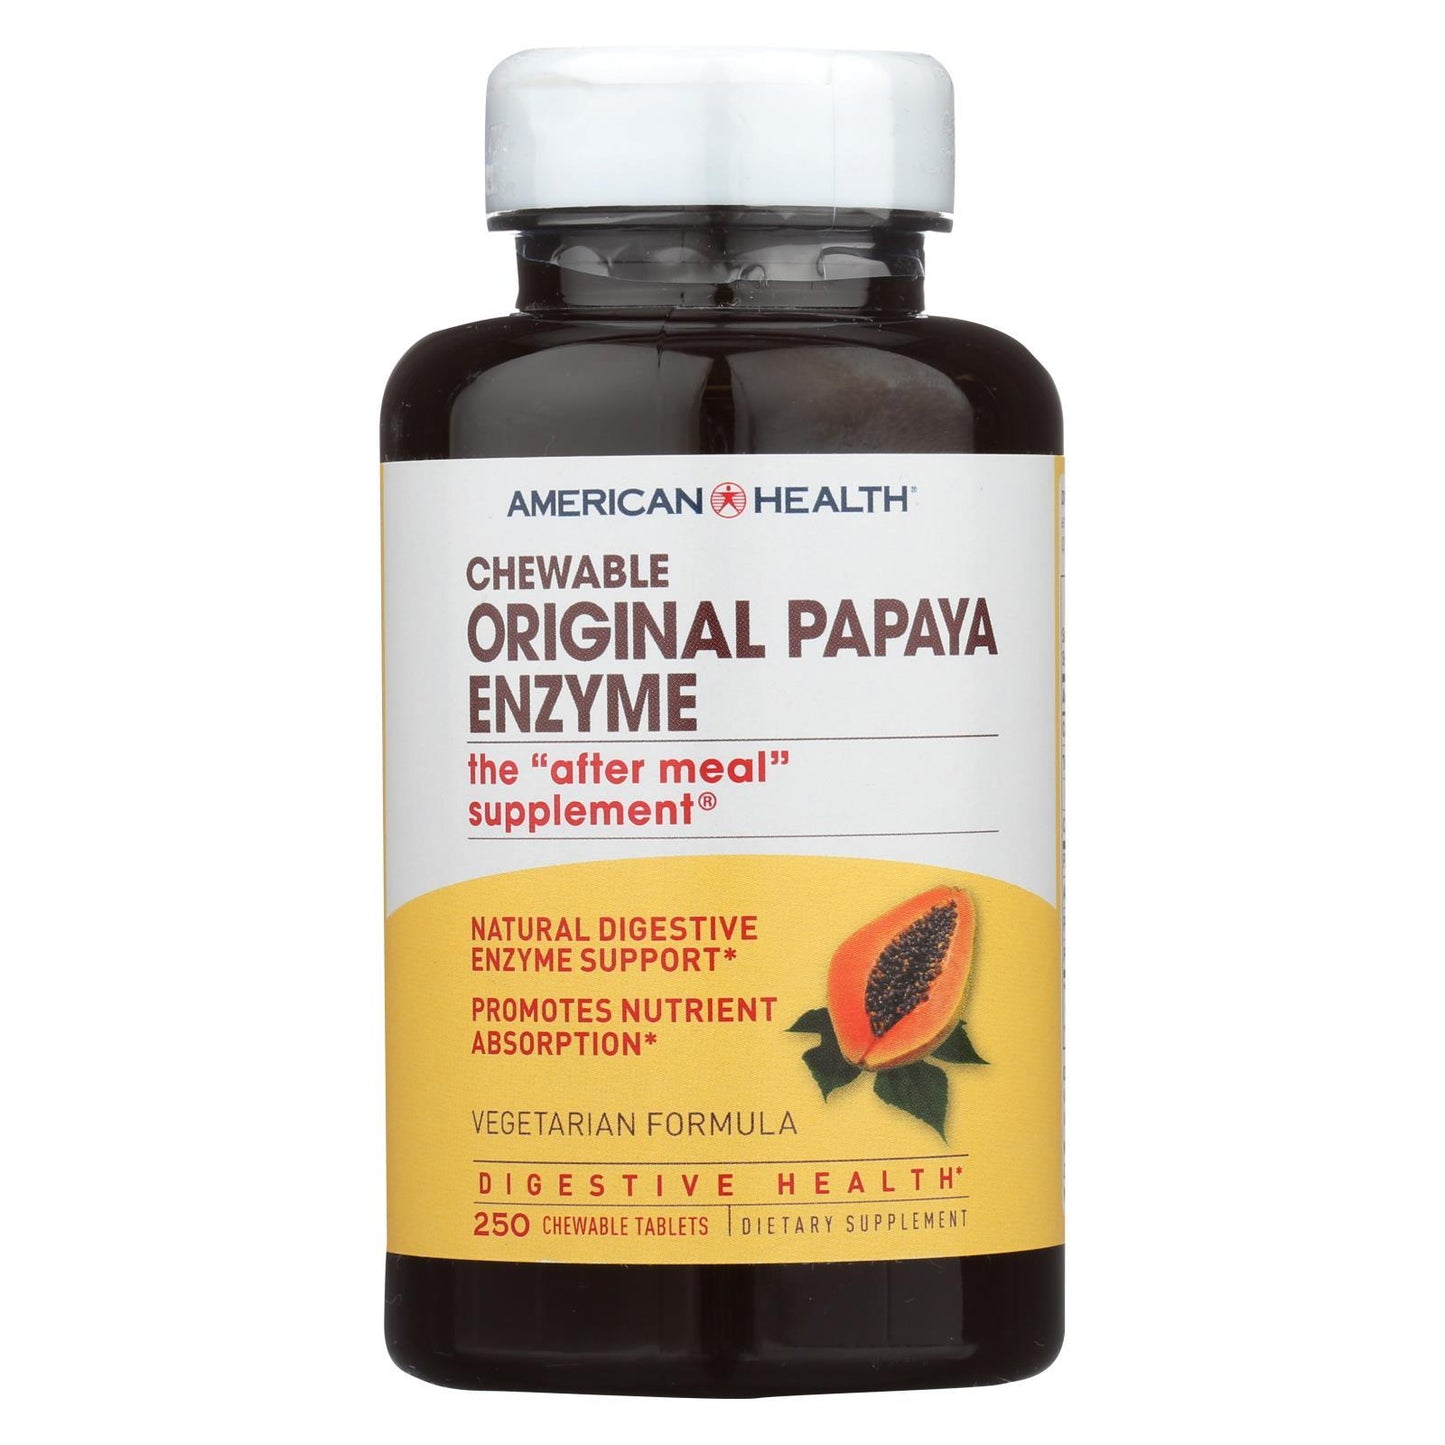 American Health - Original Papaya Enzyme Chewable - 250 Tablets